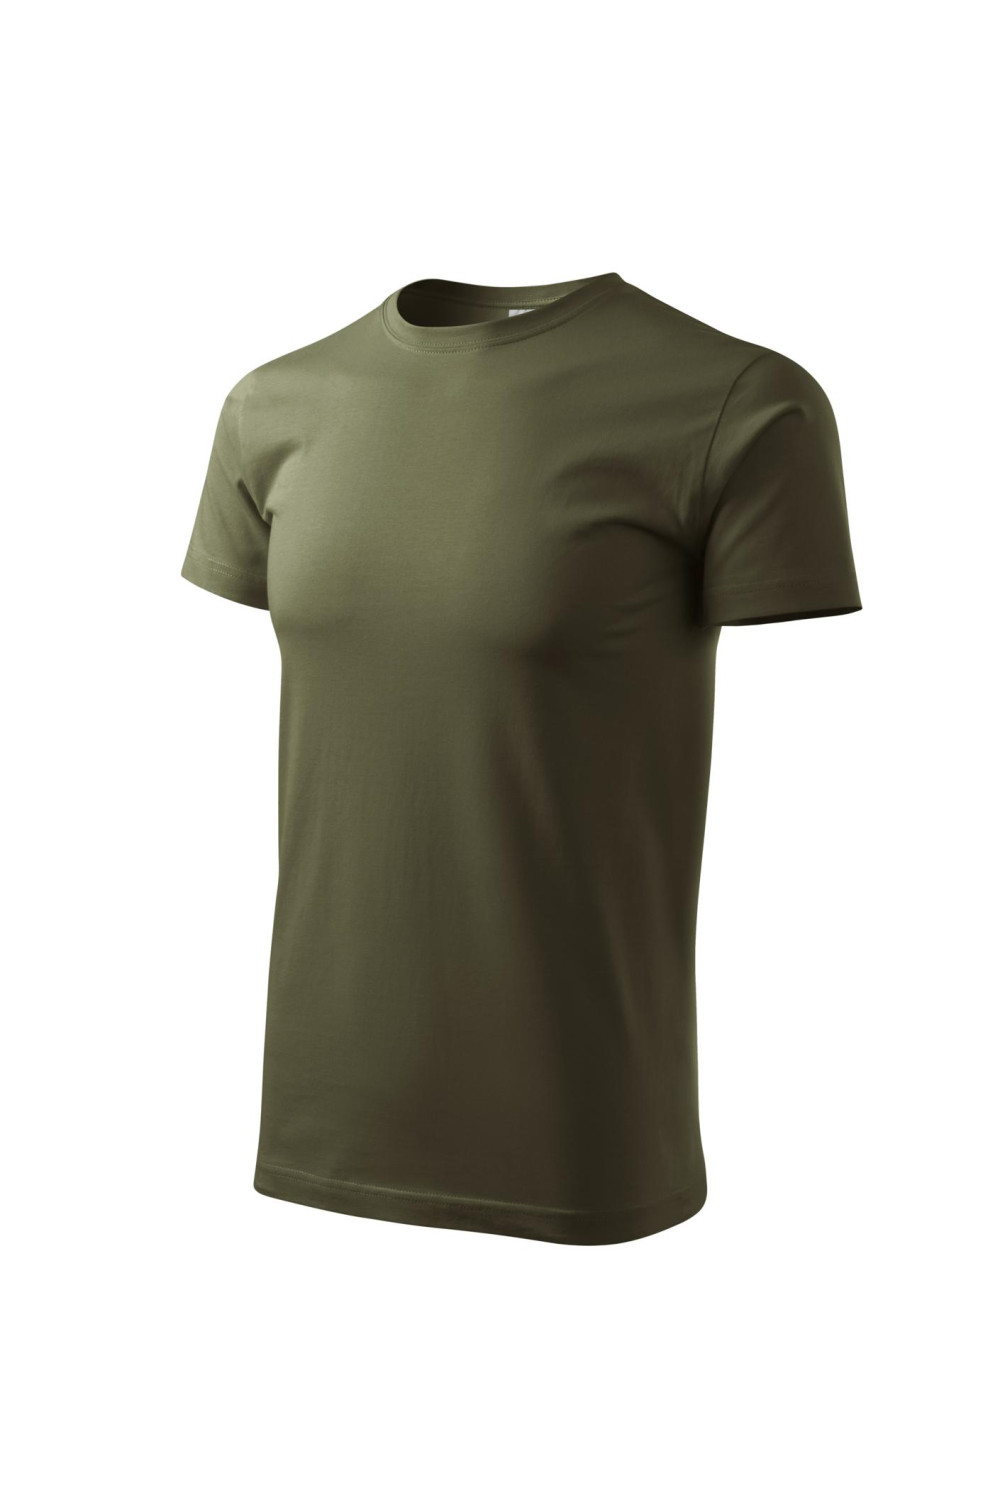 Koszulka męska 100% bawełna BASIC 129  kolor military